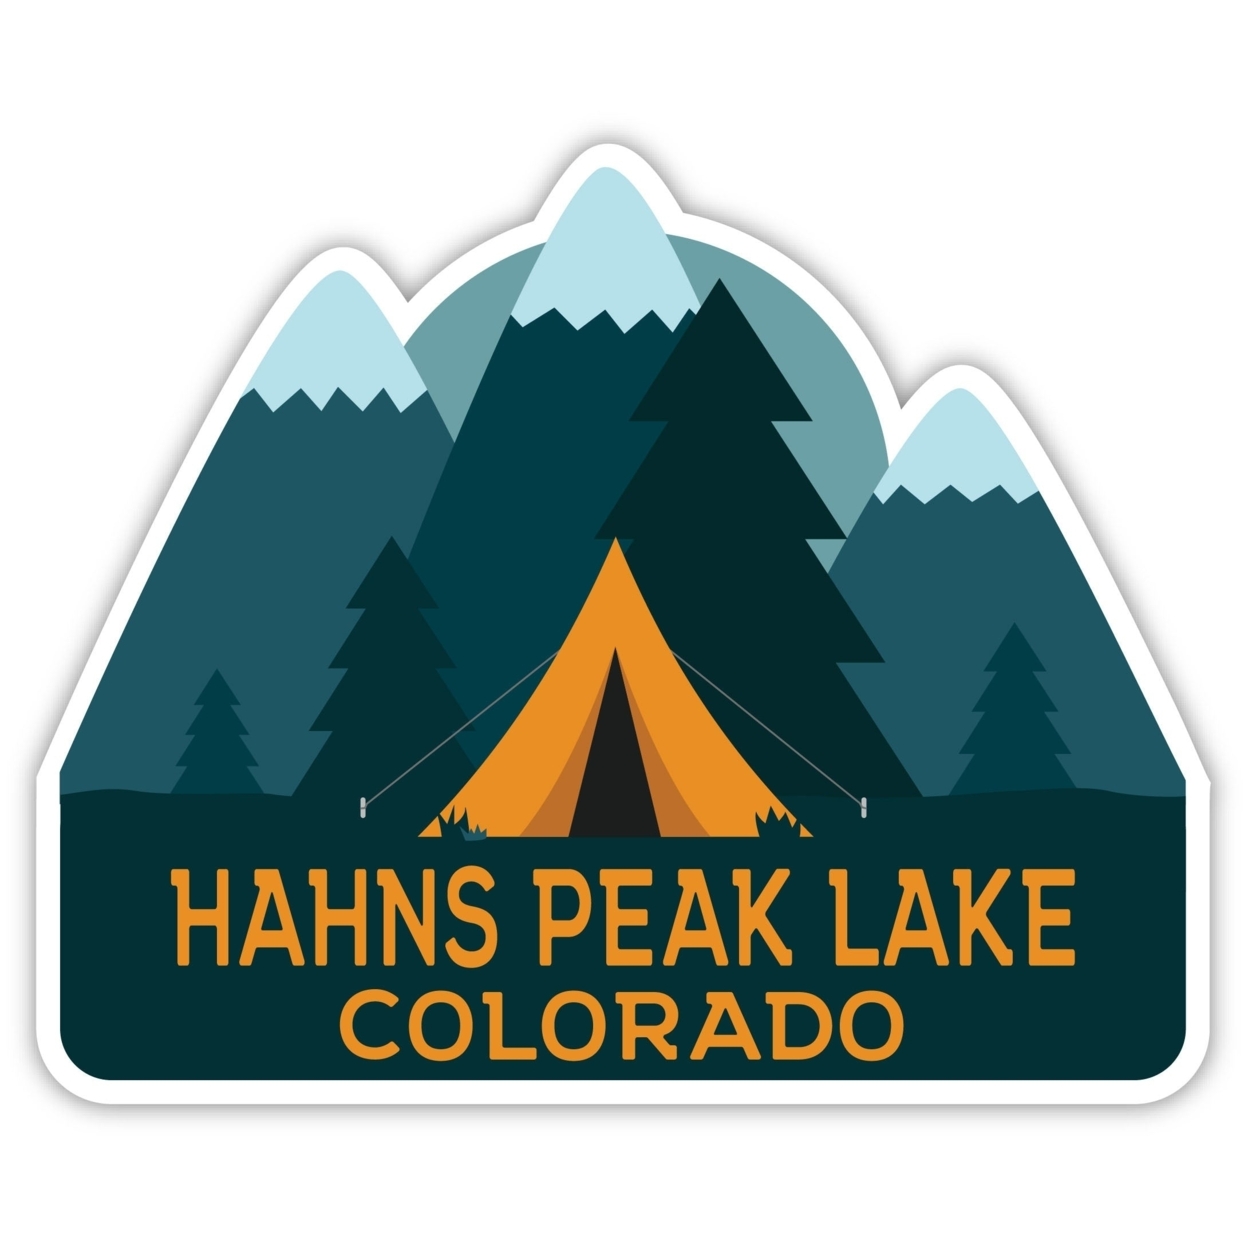 Hahns Peak Lake Colorado Souvenir Decorative Stickers (Choose Theme And Size) - 4-Pack, 6-Inch, Tent